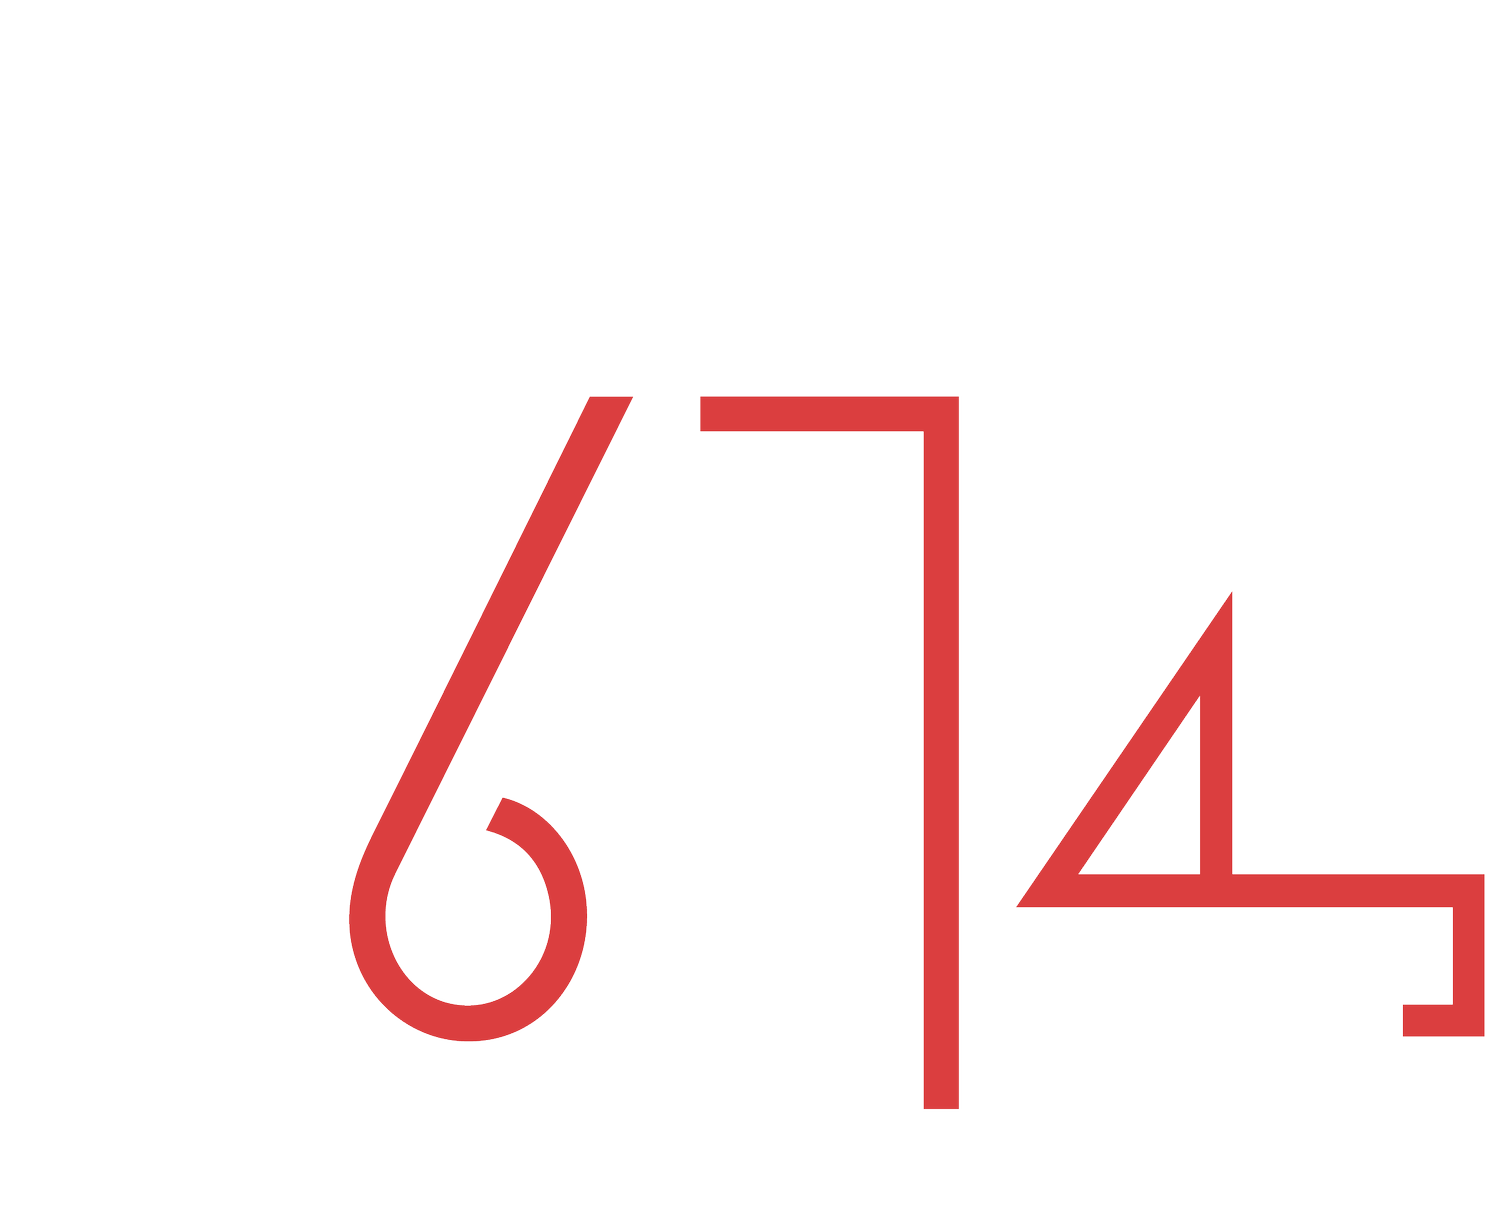 Destination 614